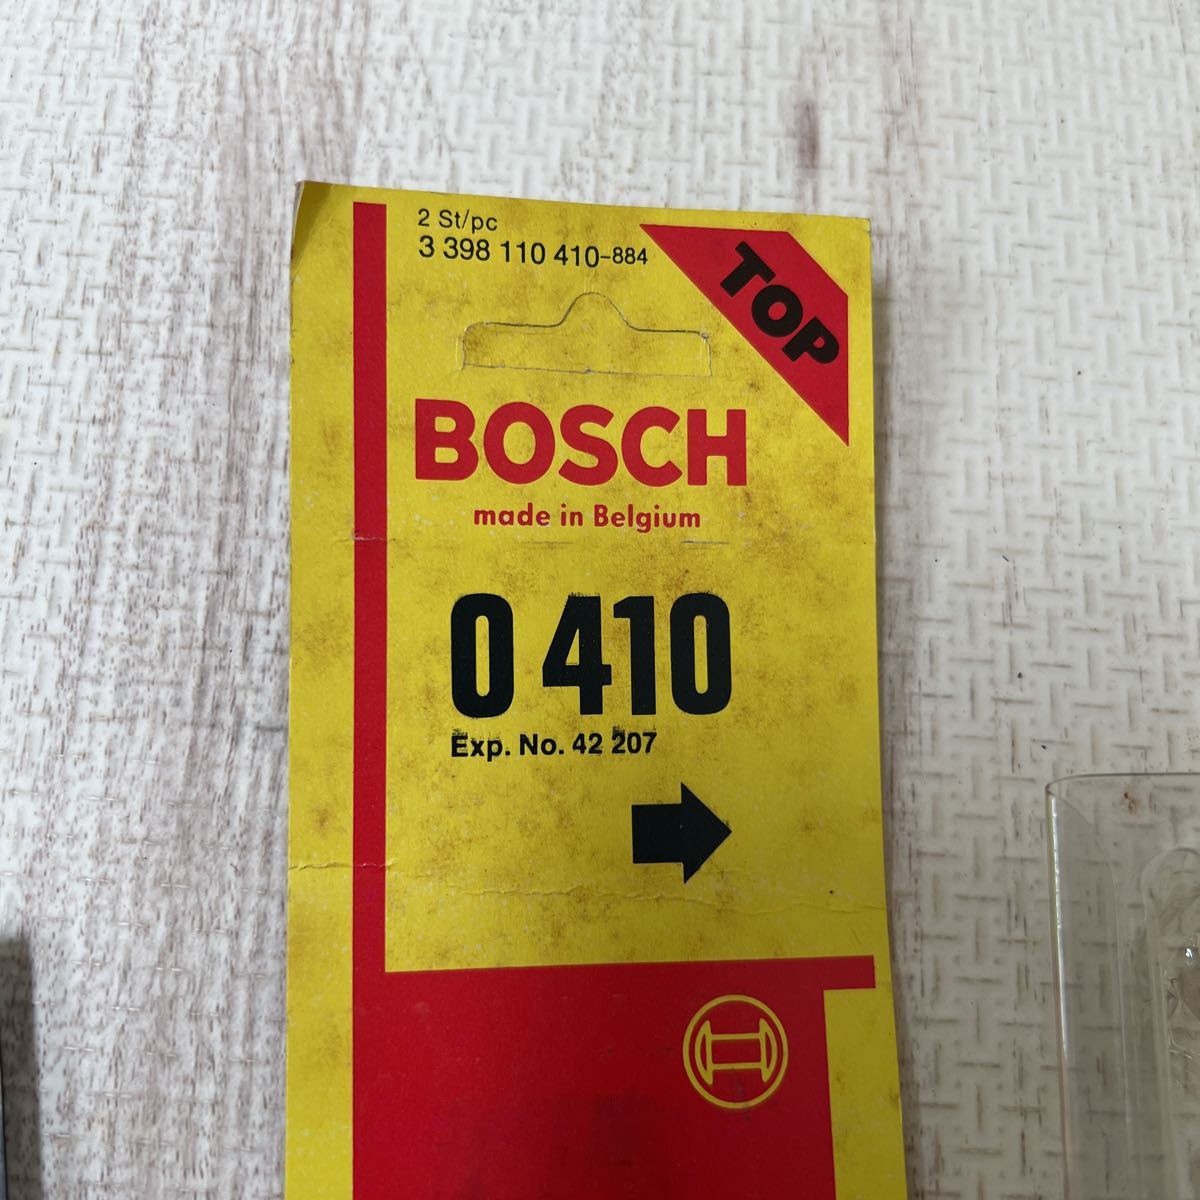 ［100918］BOSCH ワイパーブレード 0 410 ベルギー 適応車種は画像にありますの画像6